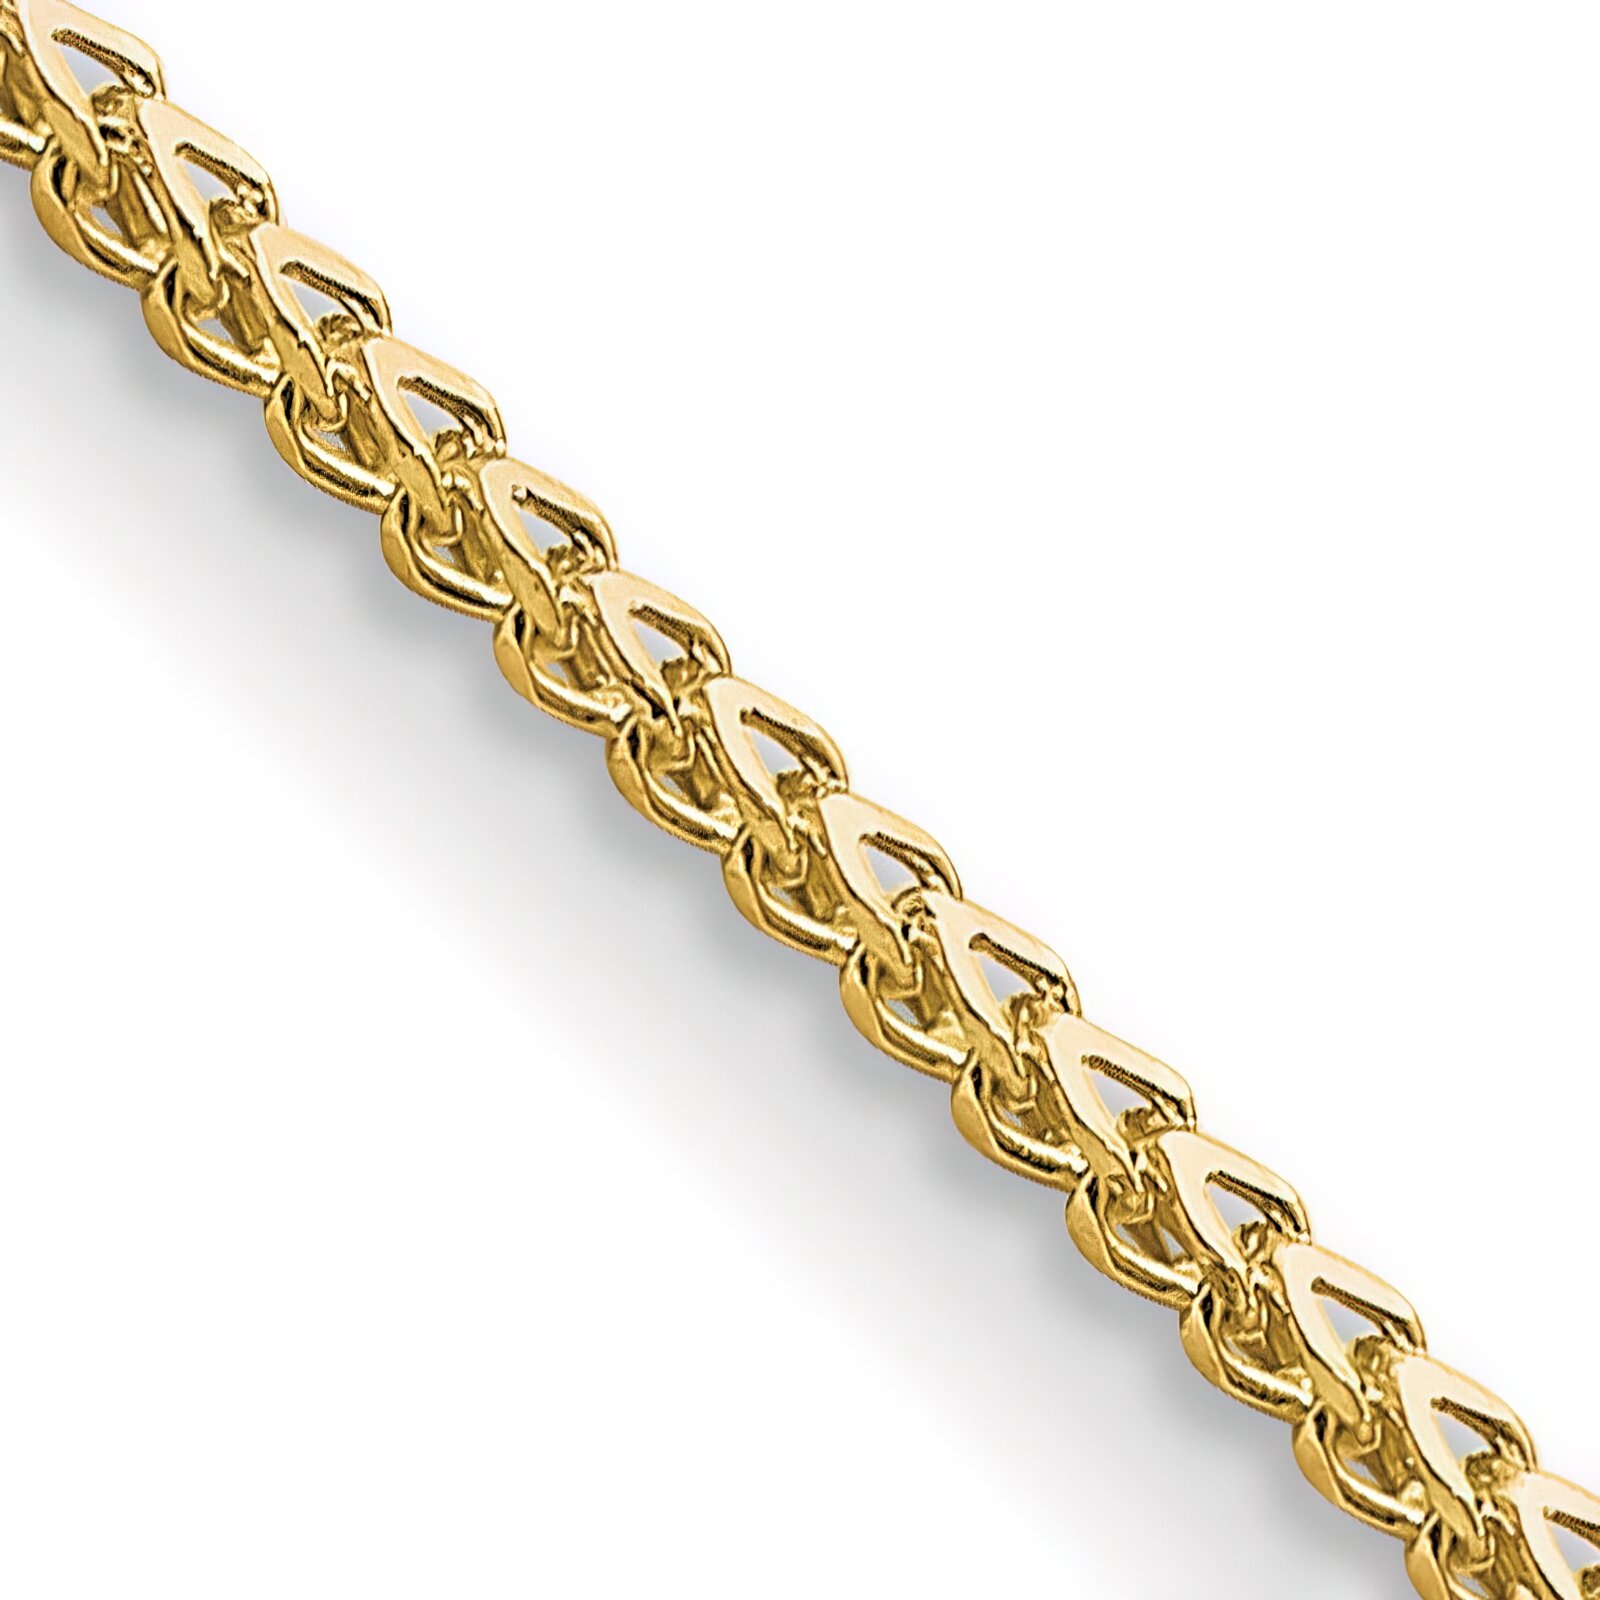 Findingking 14K Yellow Gold Franco Chain Bracelet Jewelry 8" 1mm